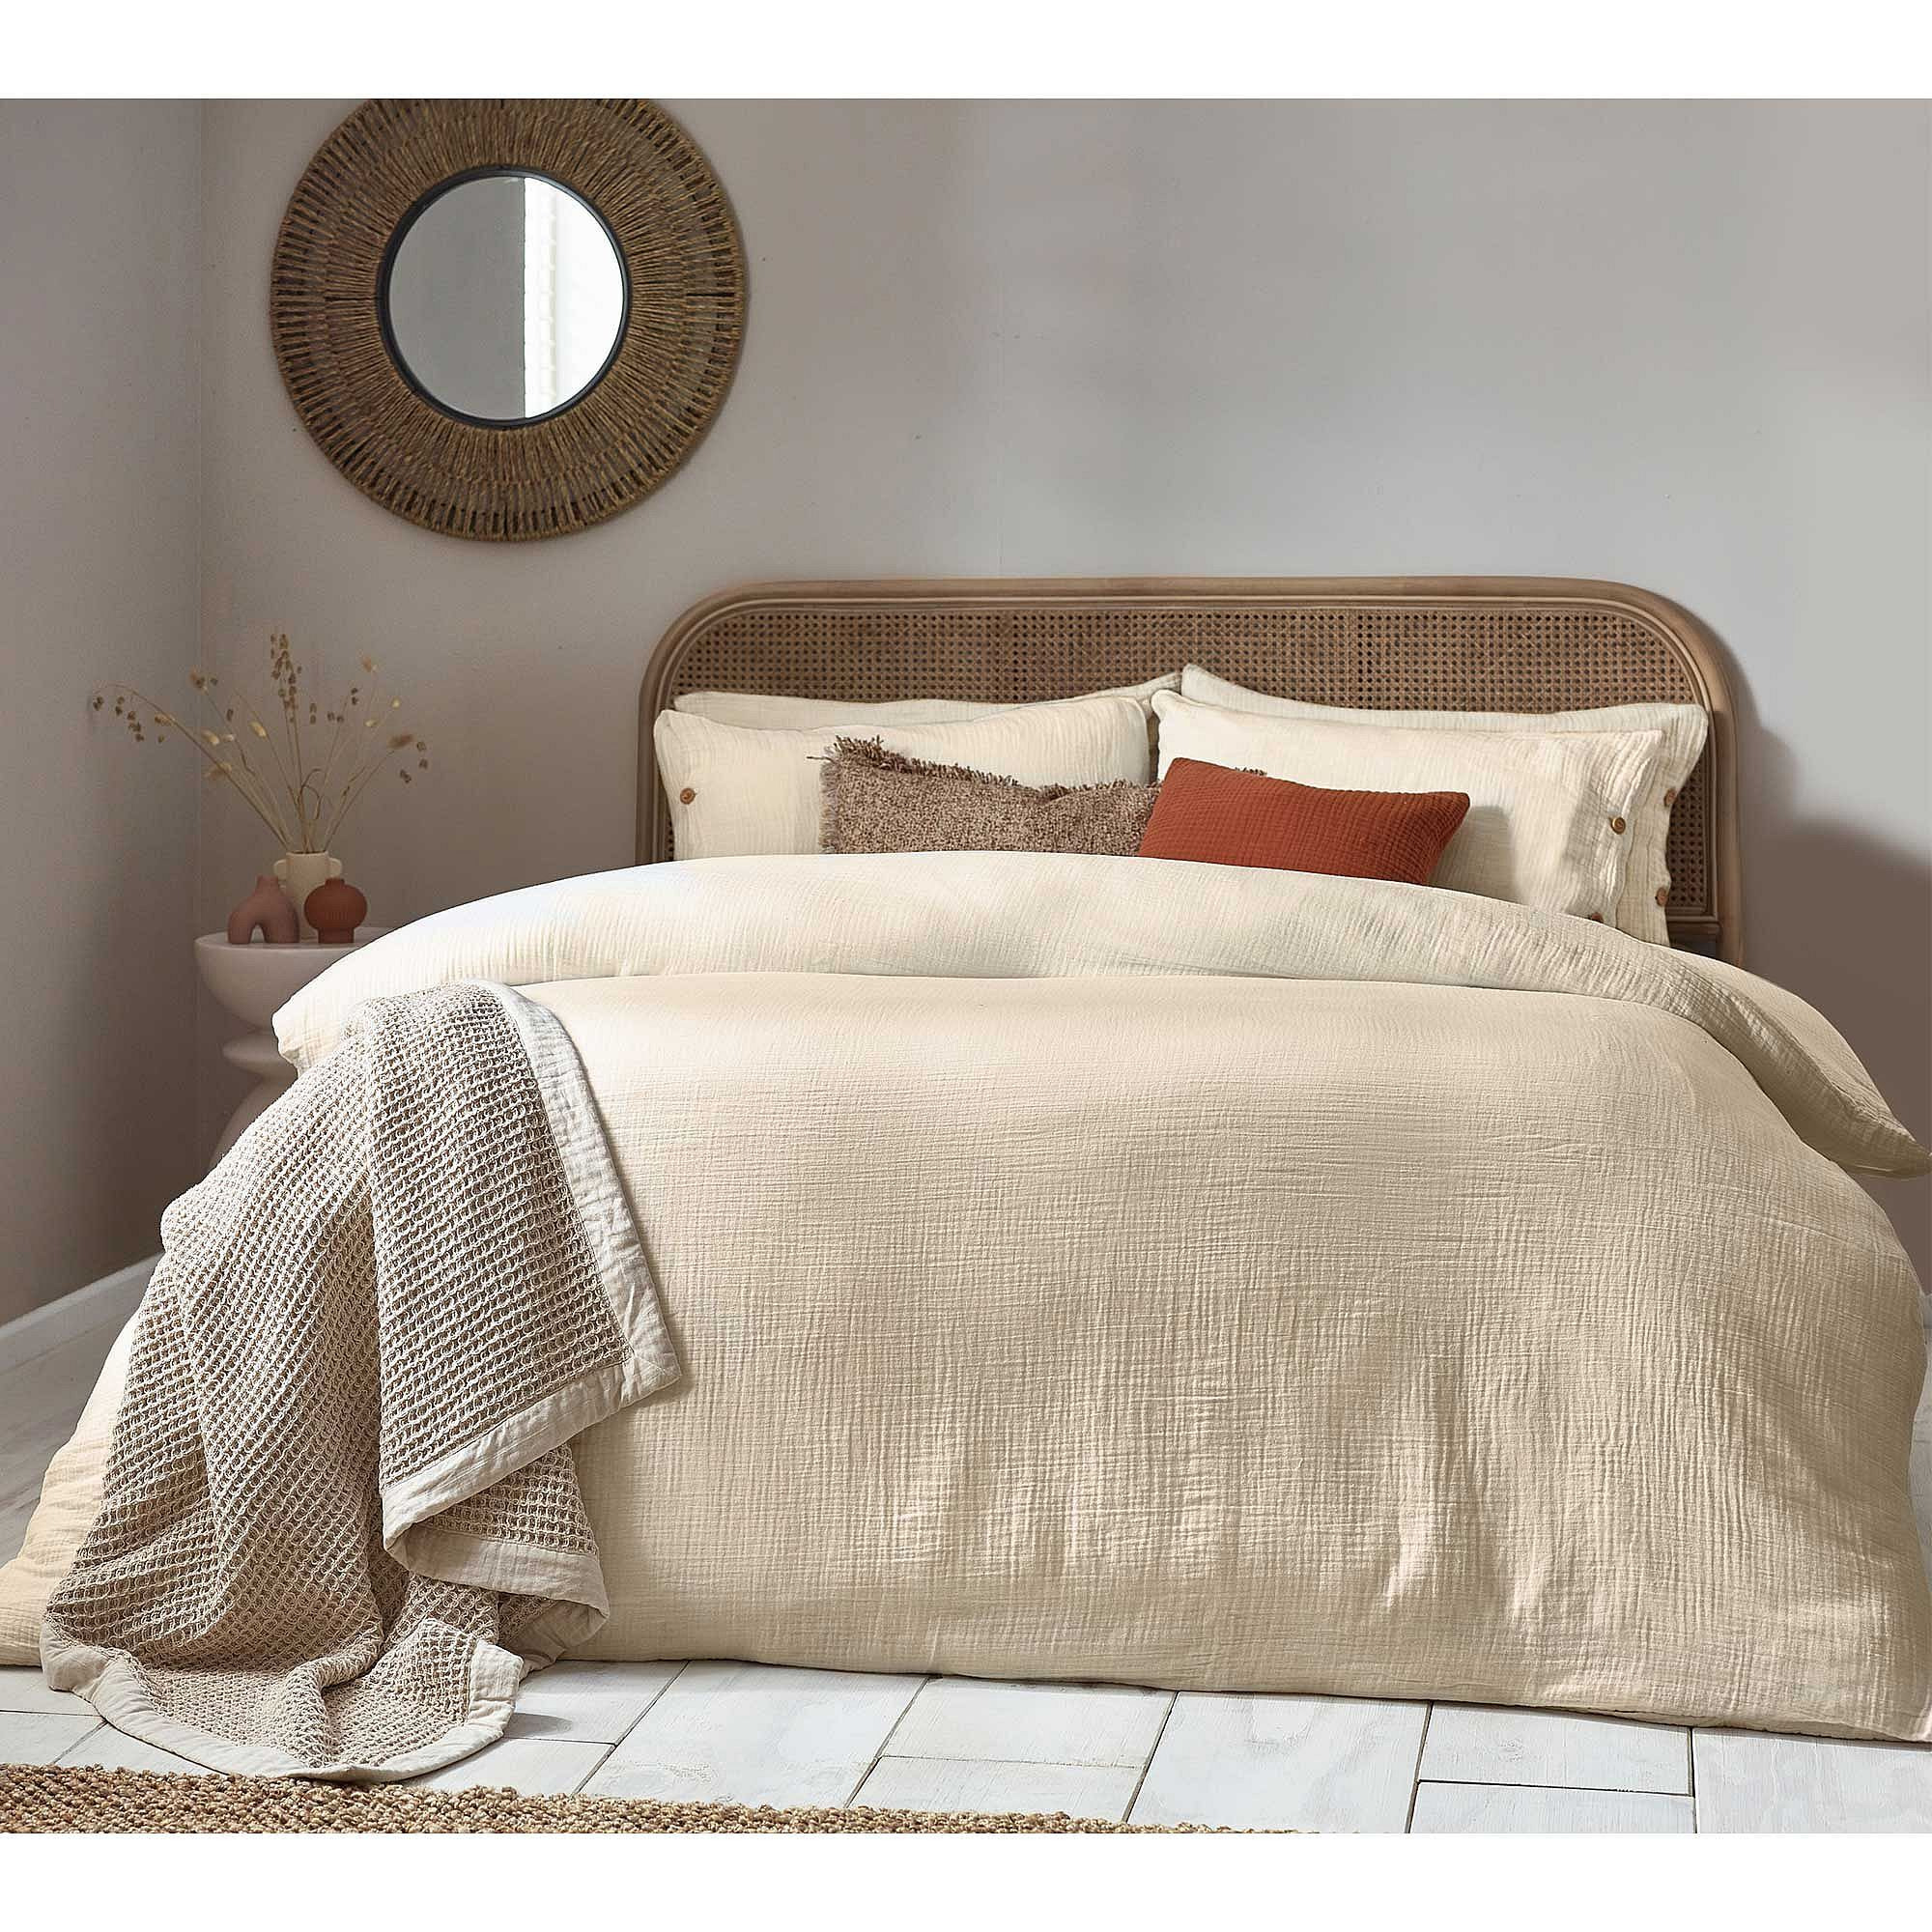 Apricity Oatmeal Crinkle Bed Linen Set (Single Set) - image 1